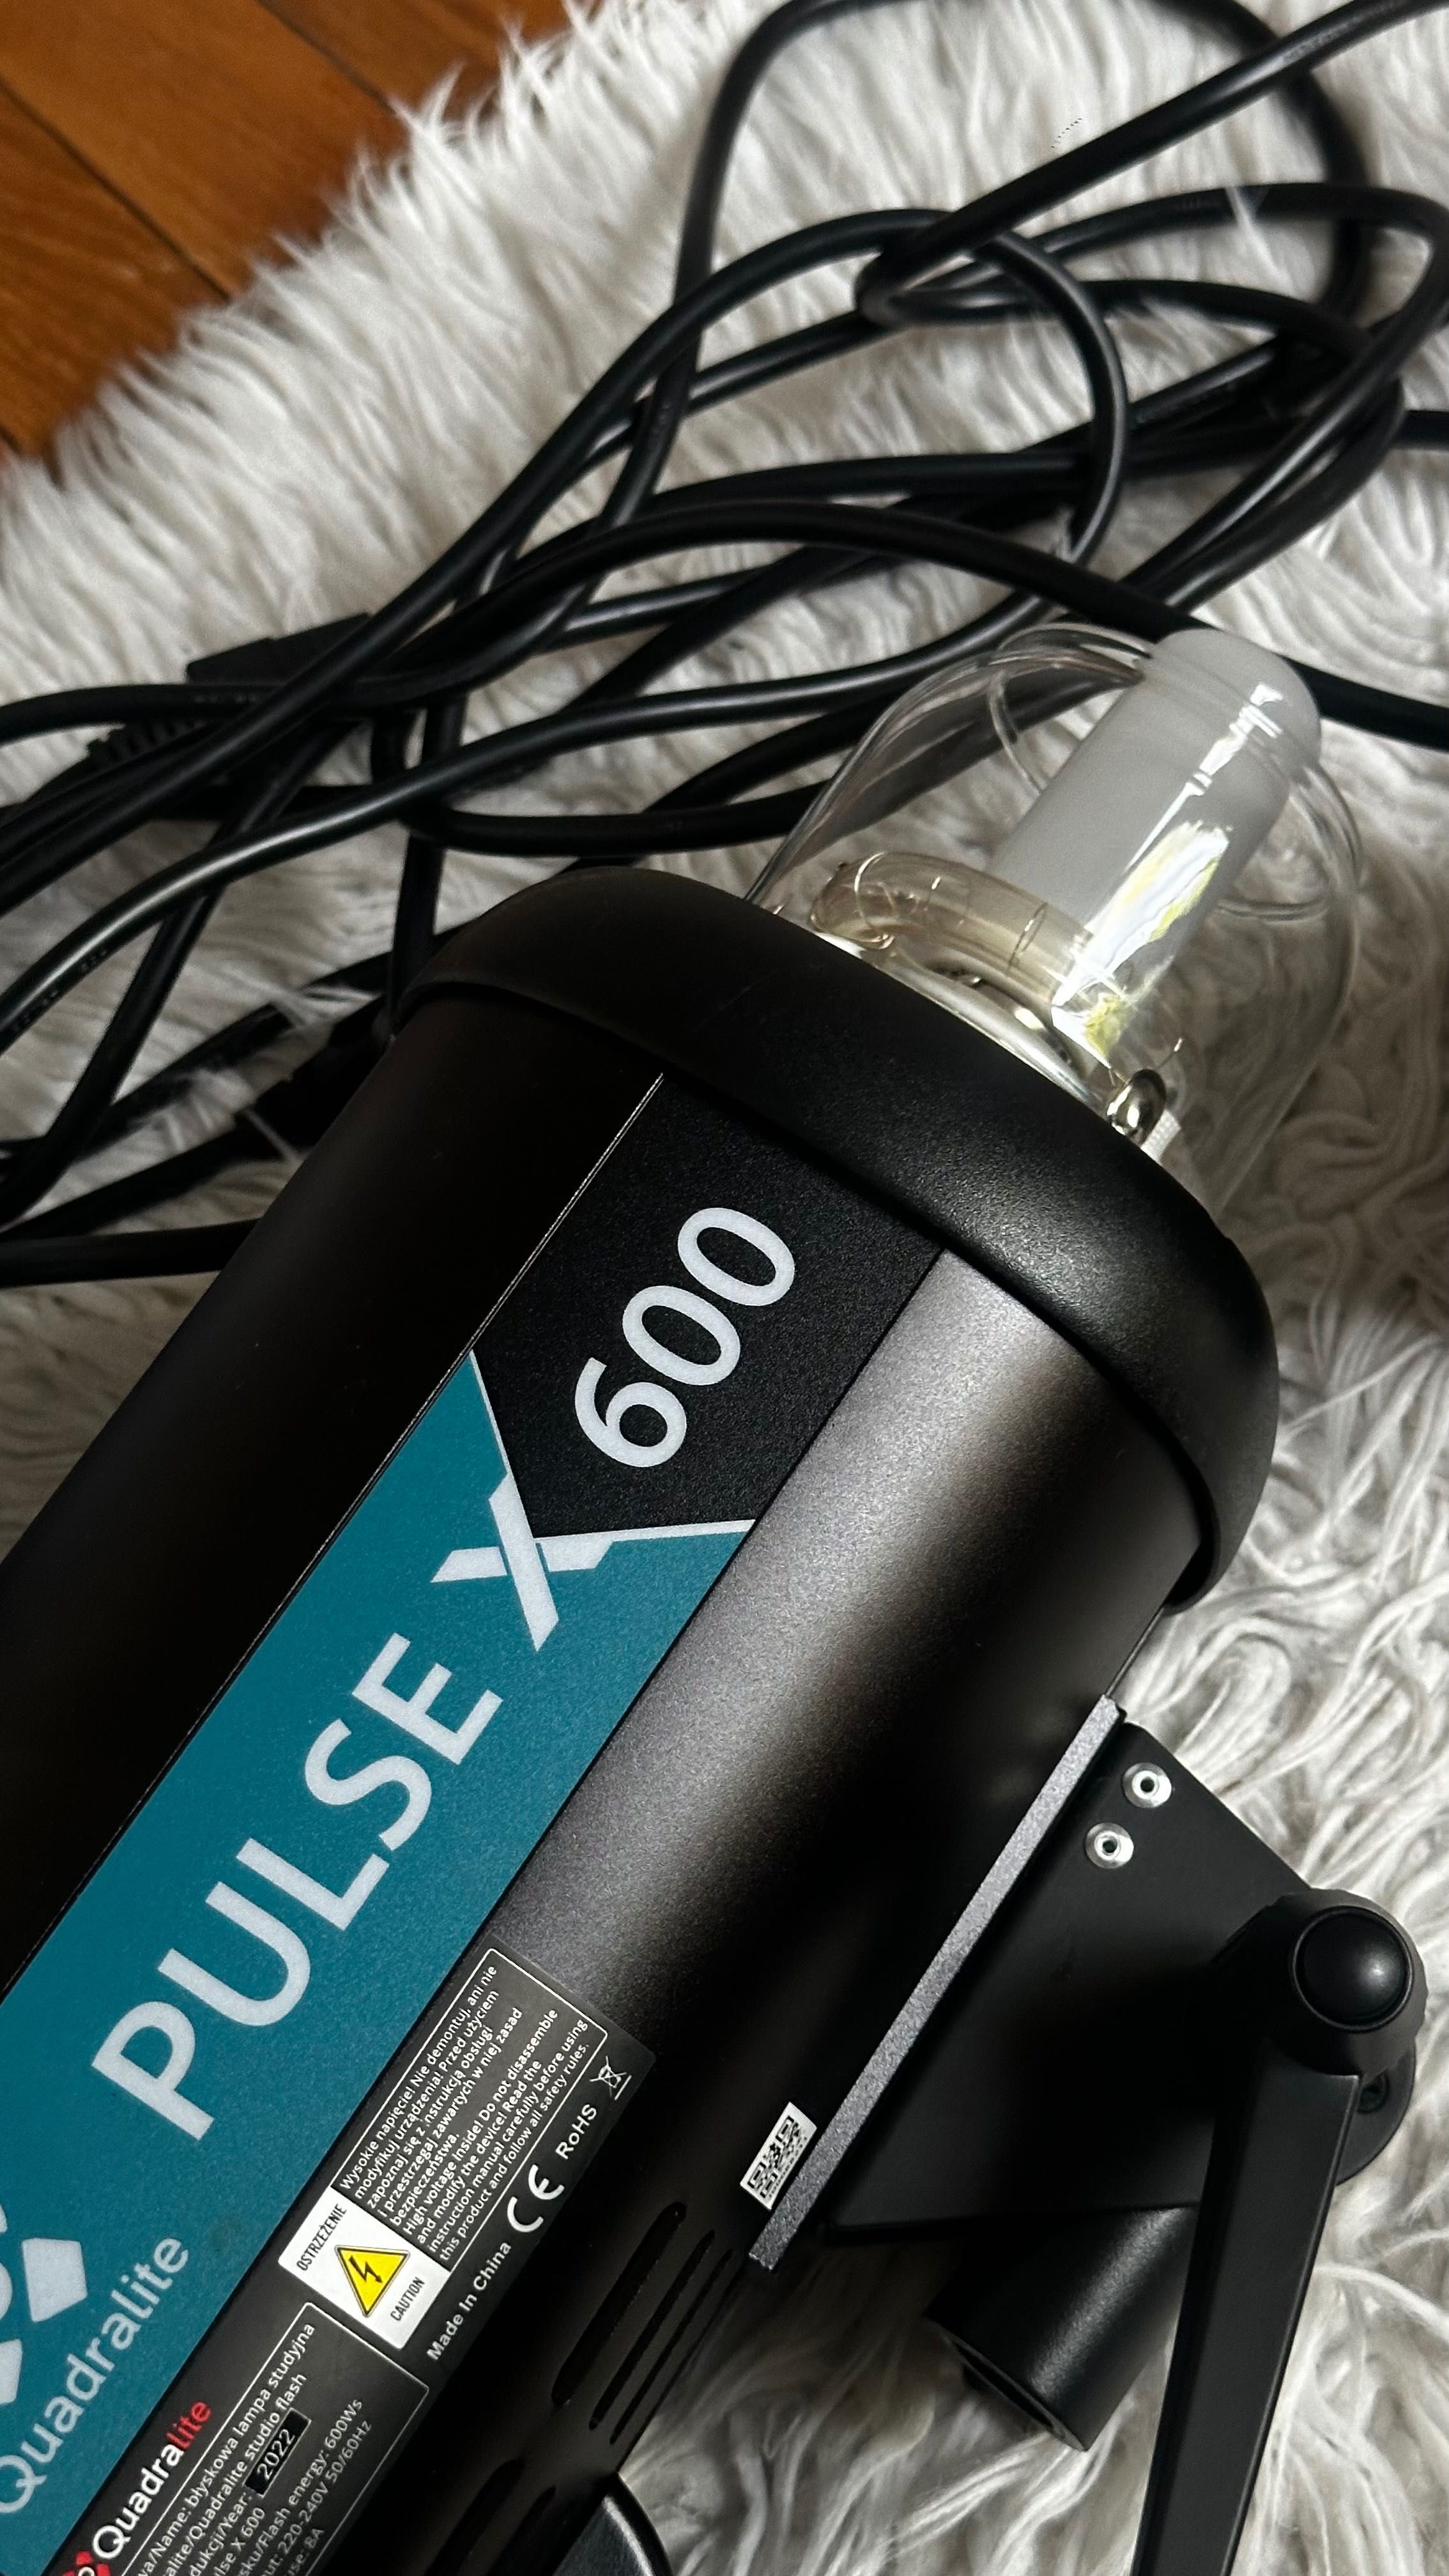 Quadralite Pulse X 600